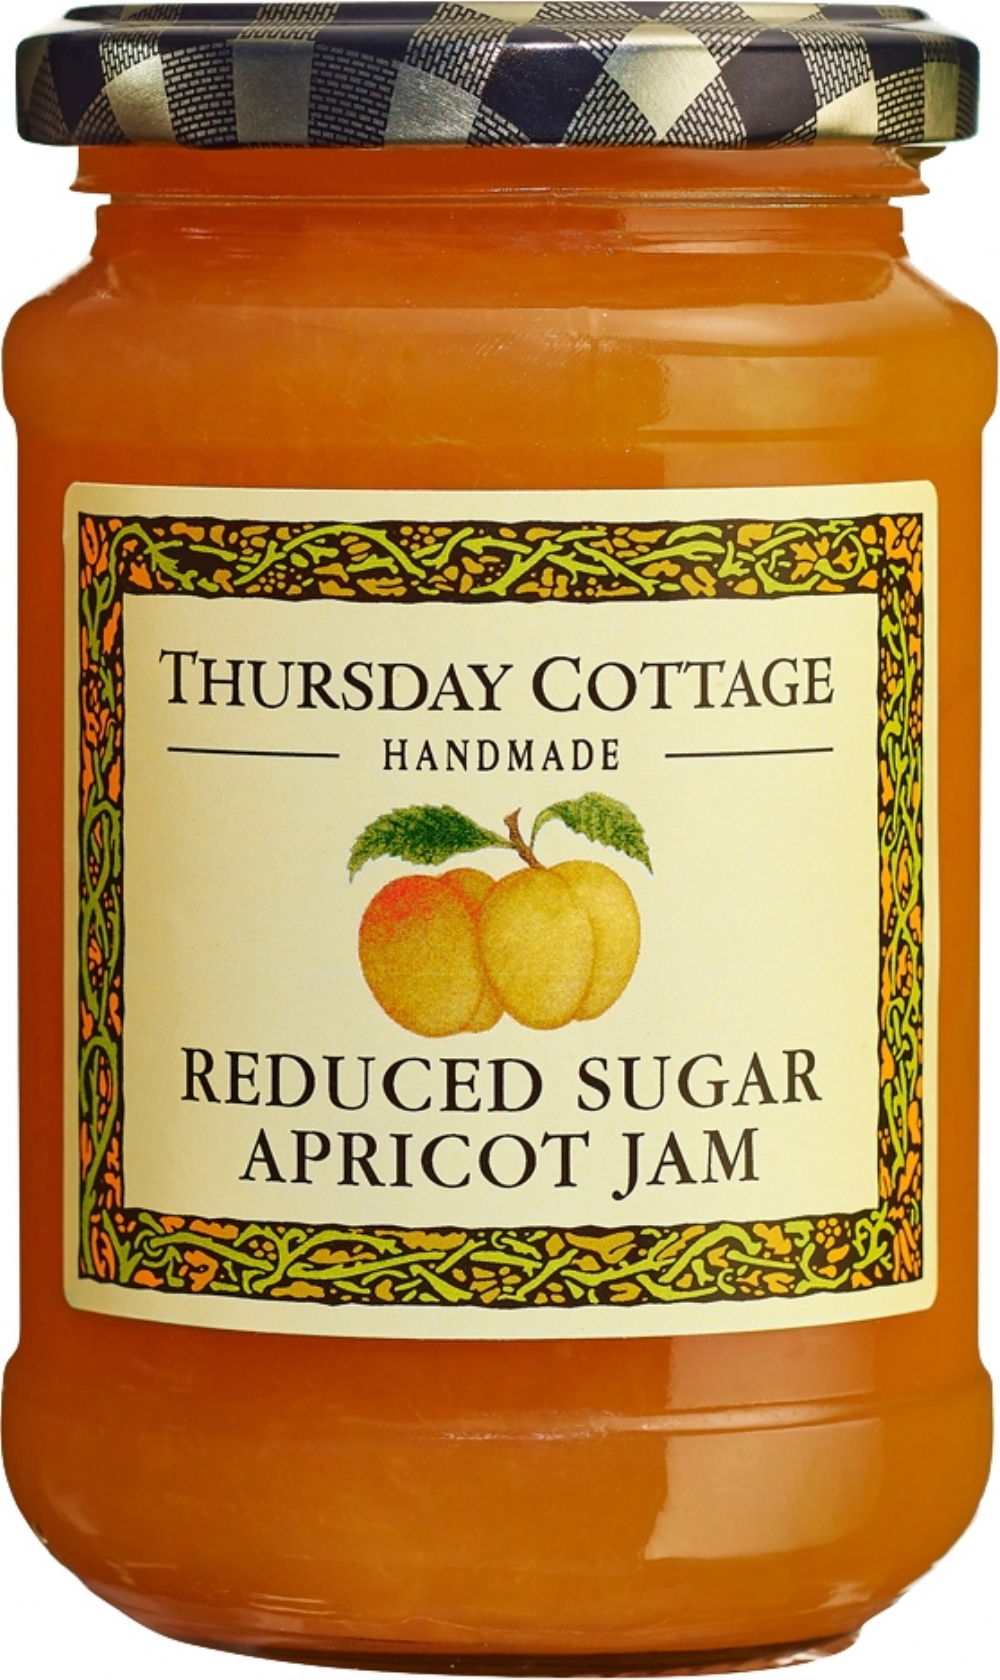 THURSDAY COTTAGE Apricot Jam - Reduced Sugar